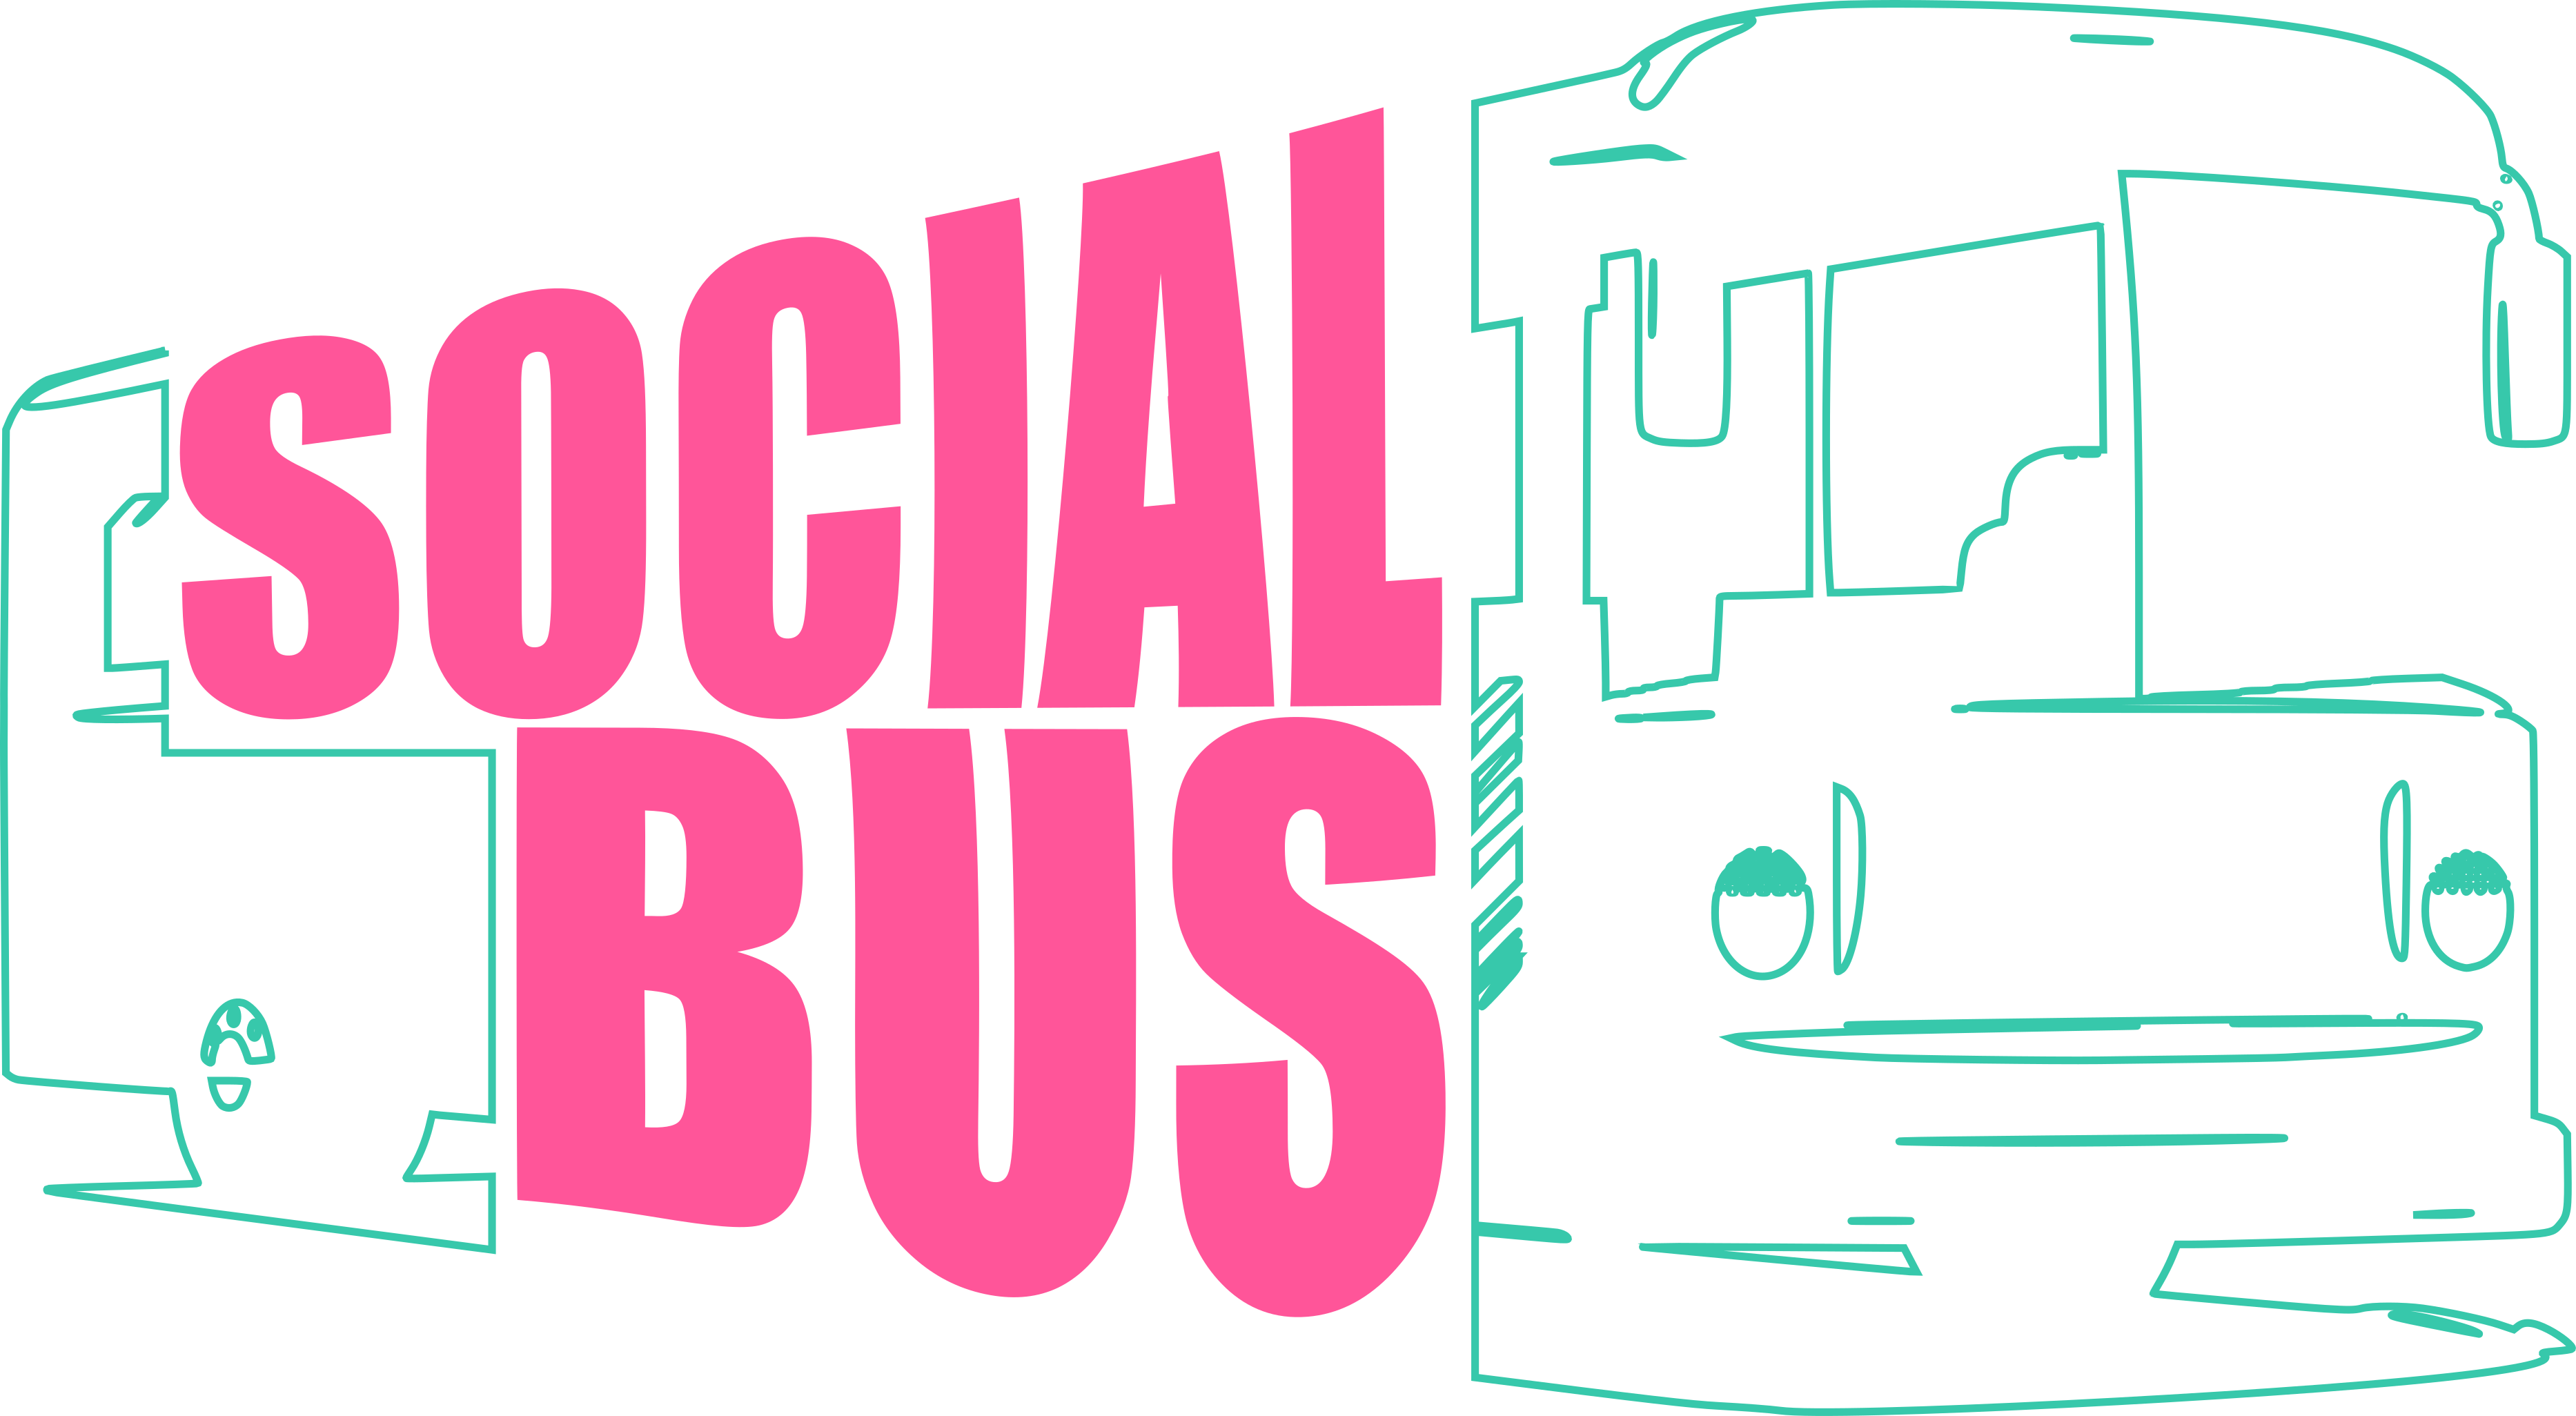 Social bus